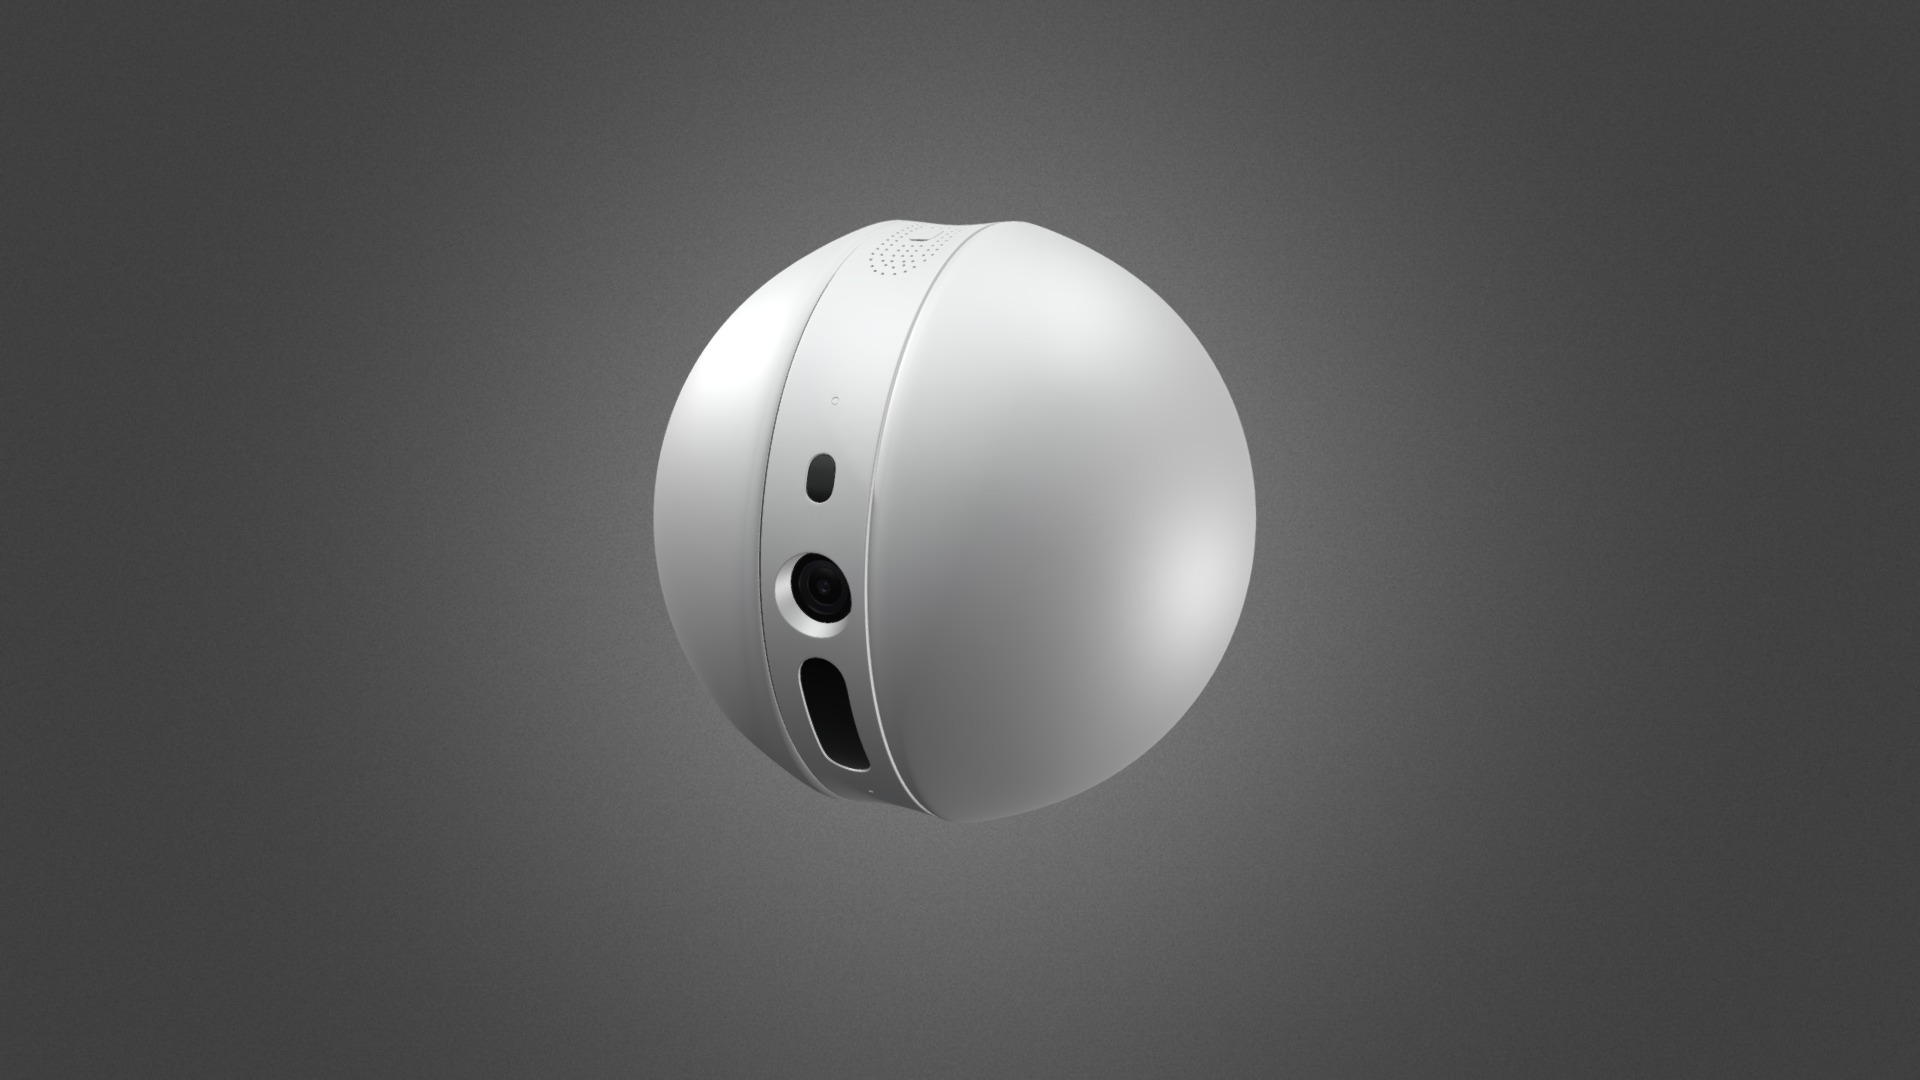 3D model LG Rolling Bot - This is a 3D model of the LG Rolling Bot. The 3D model is about a white light bulb.